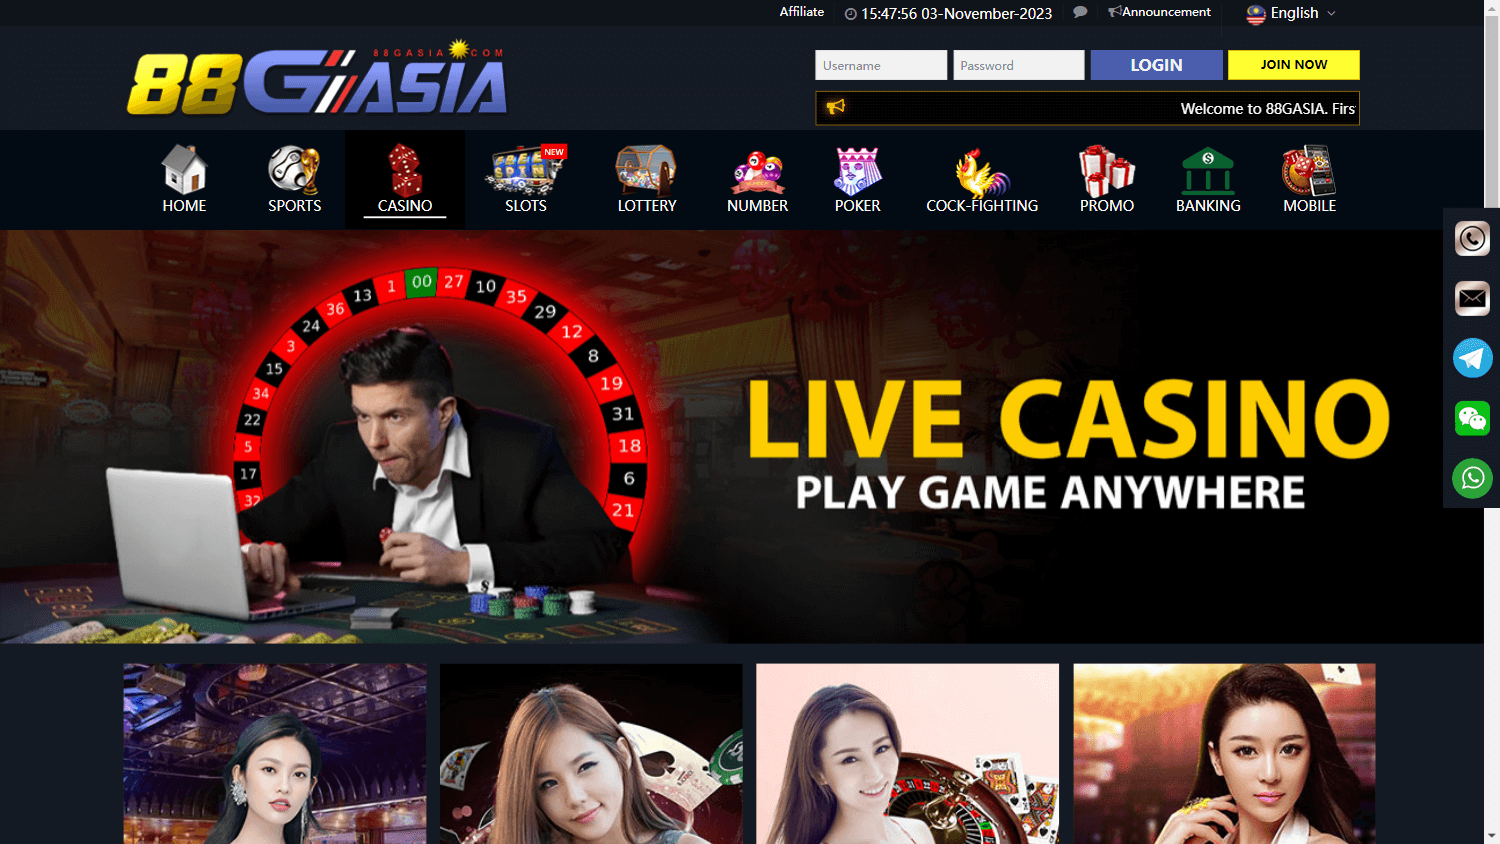 88gasia_casino_game_gallery_desktop